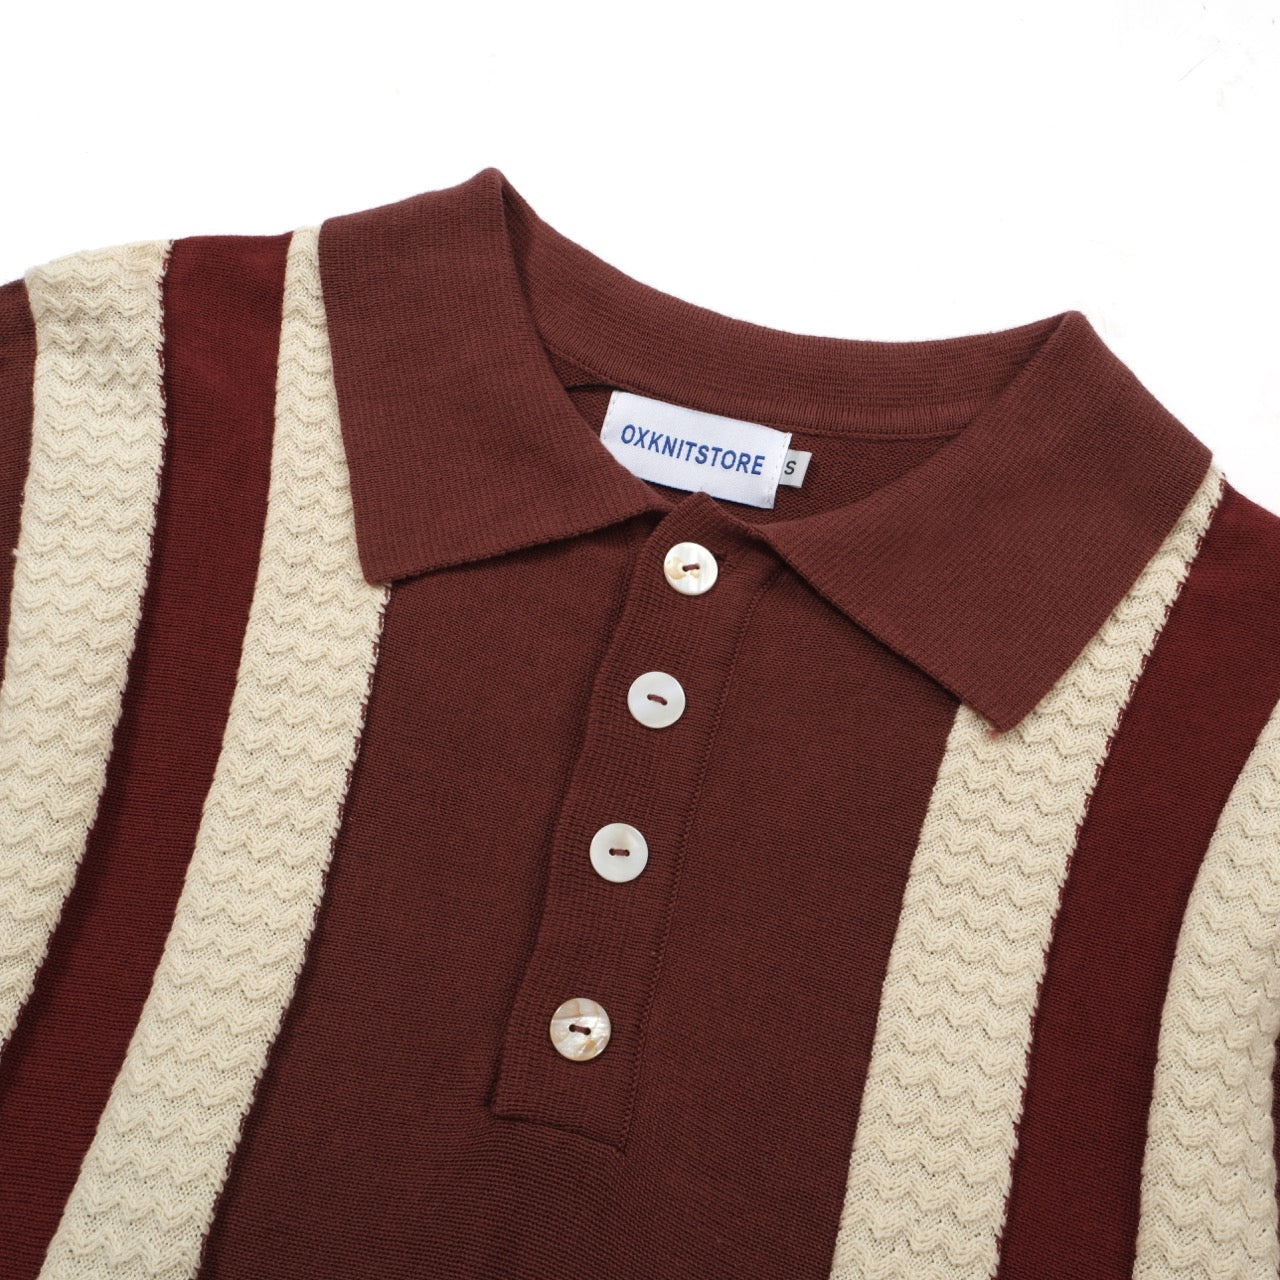 OXKNIT Men Vintage Clothing 1960s Mod Style Casual Stripe Knit Dark Brown Retro Polo